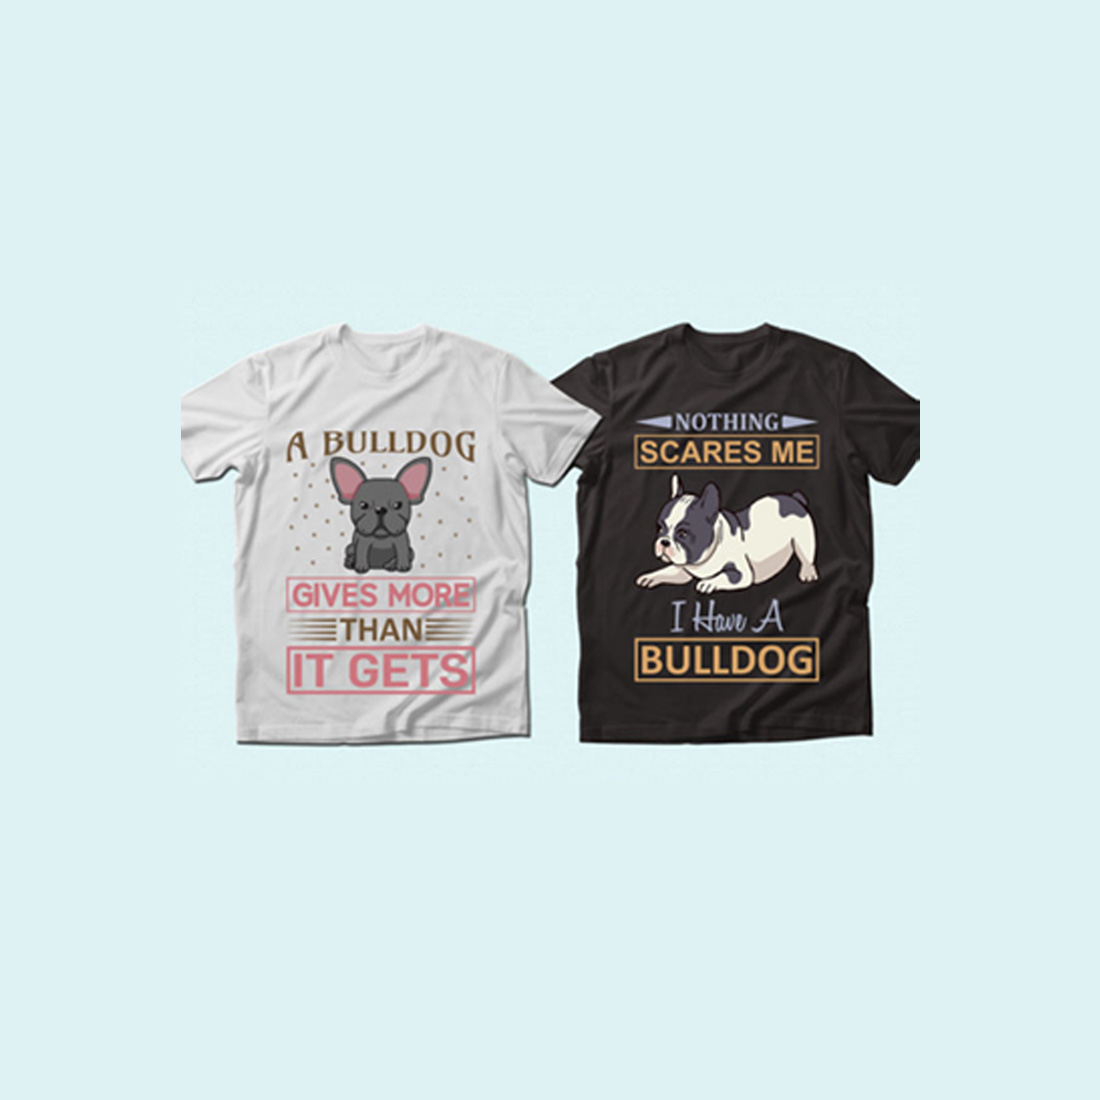 trendy 20 bulldog quotes t shirt designs 2 92